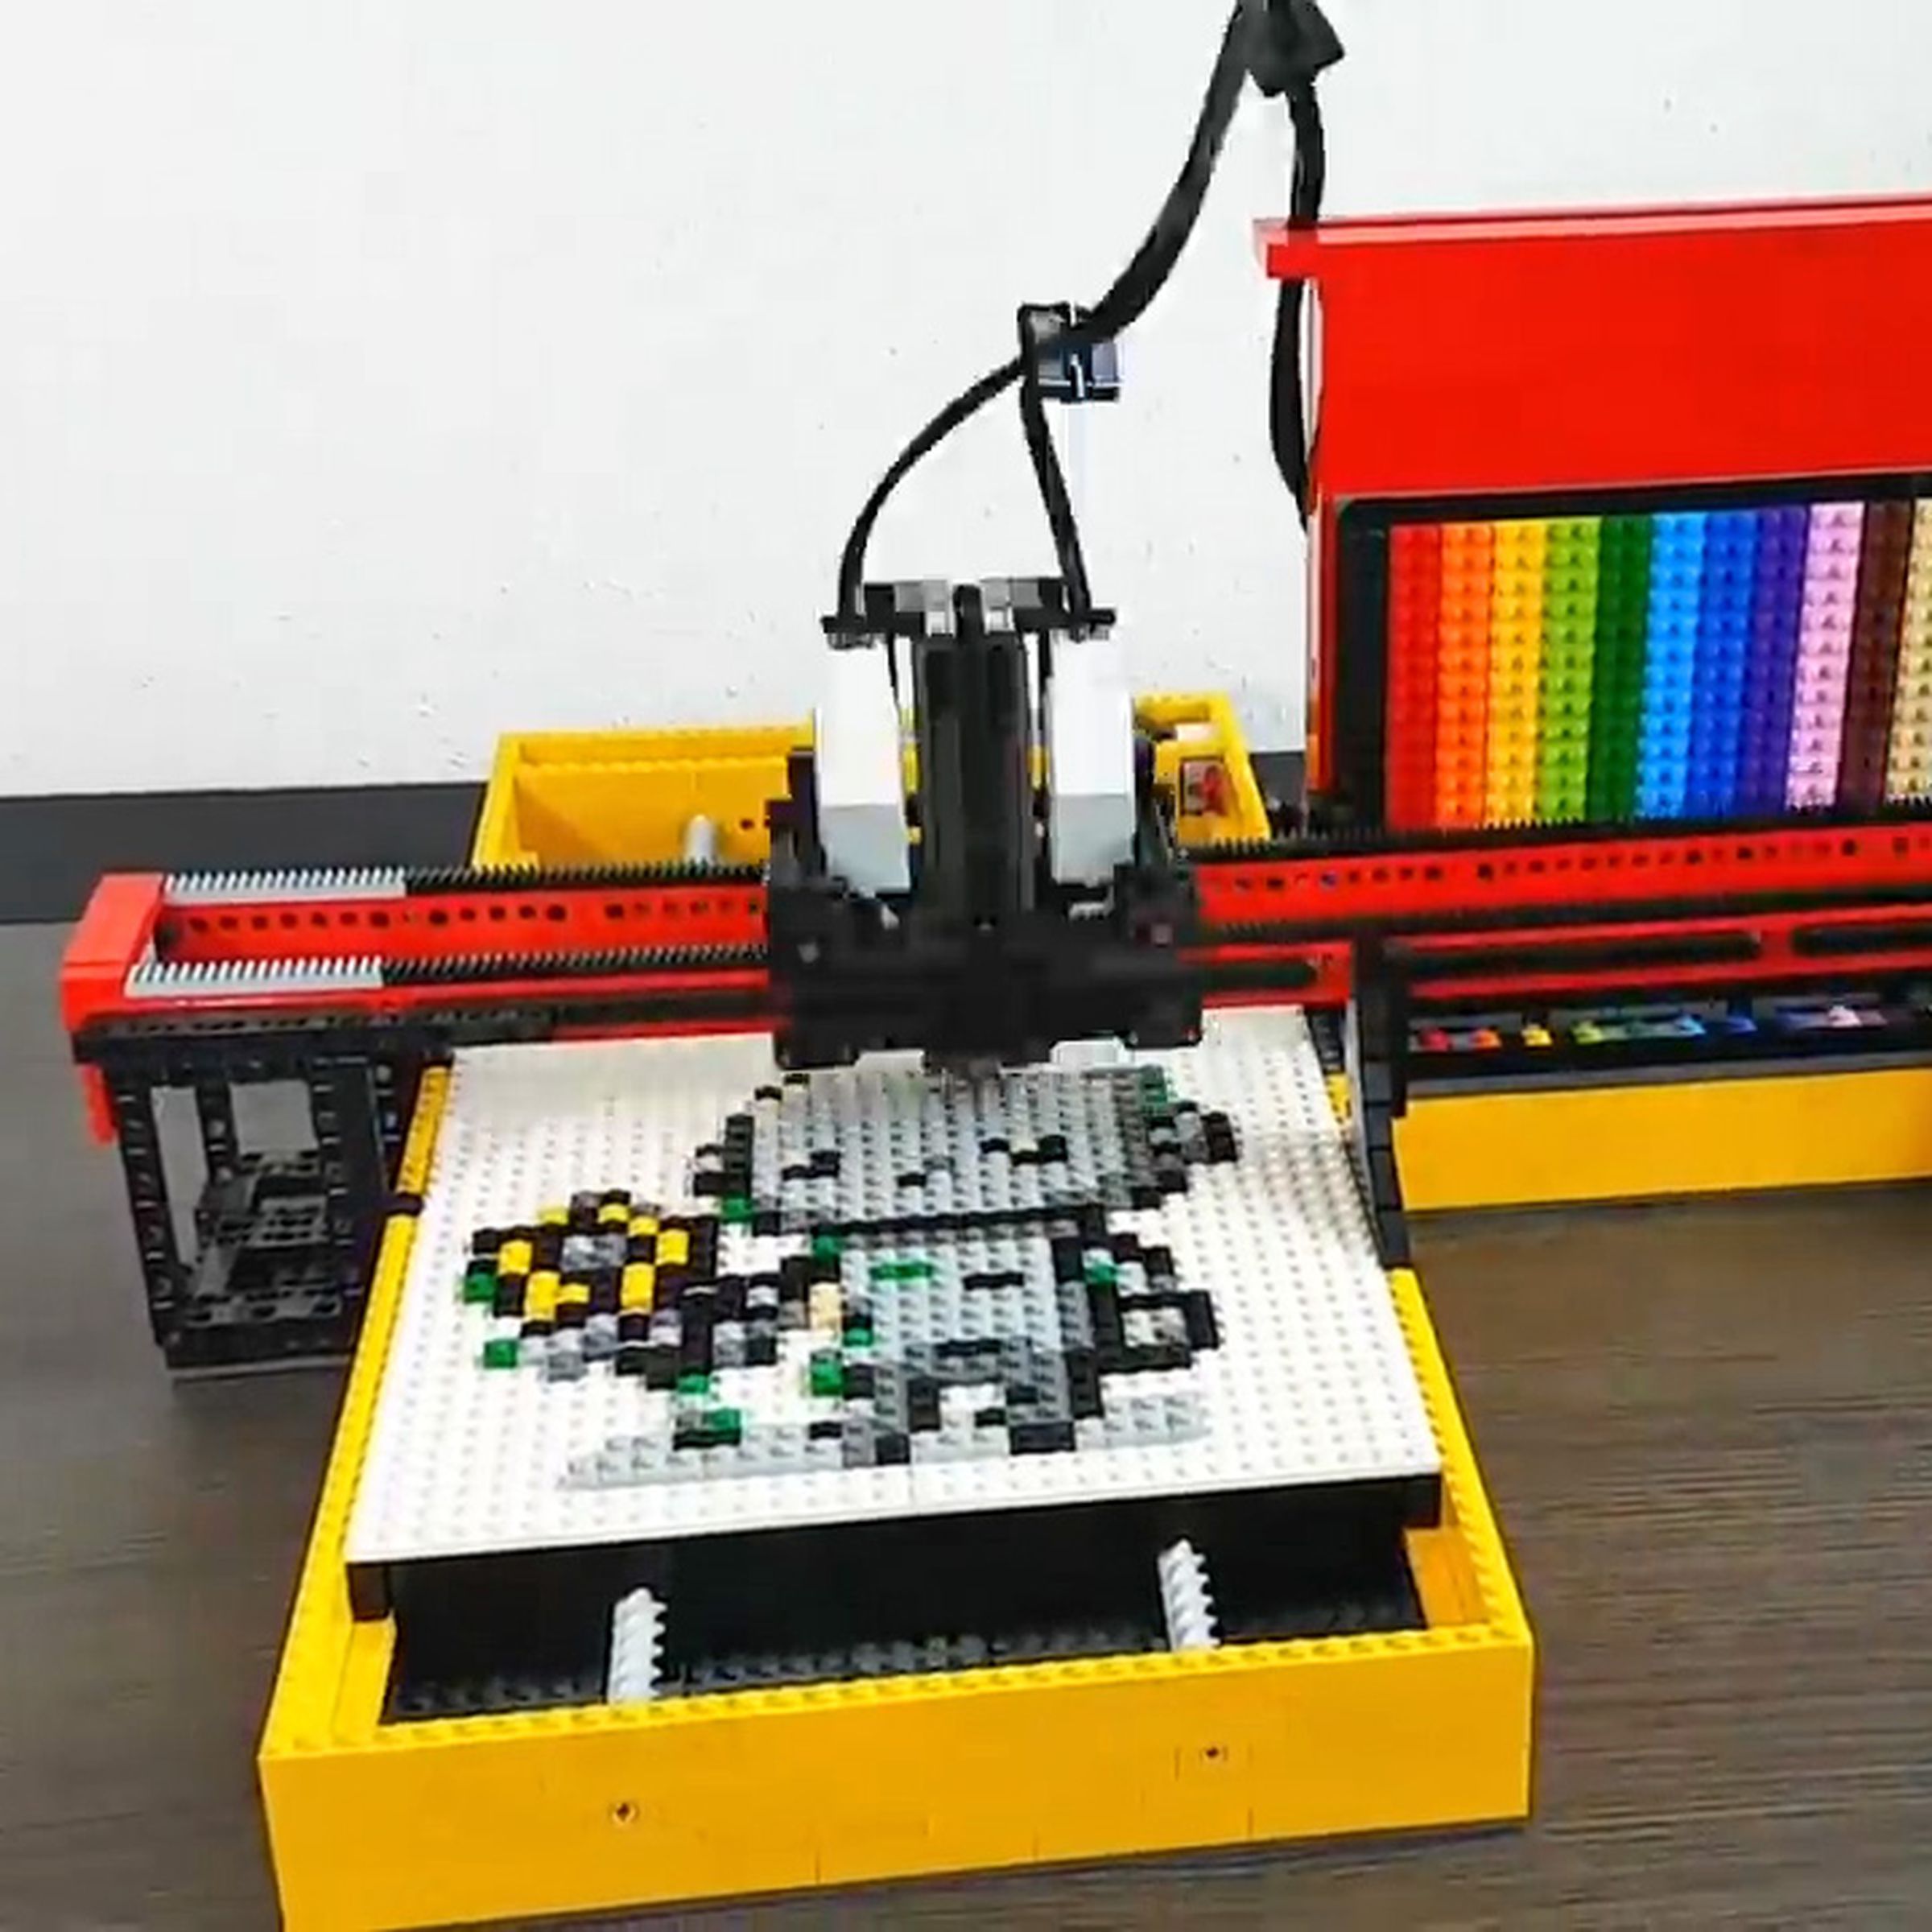 A plotter made from Lego is assembling pixel art.